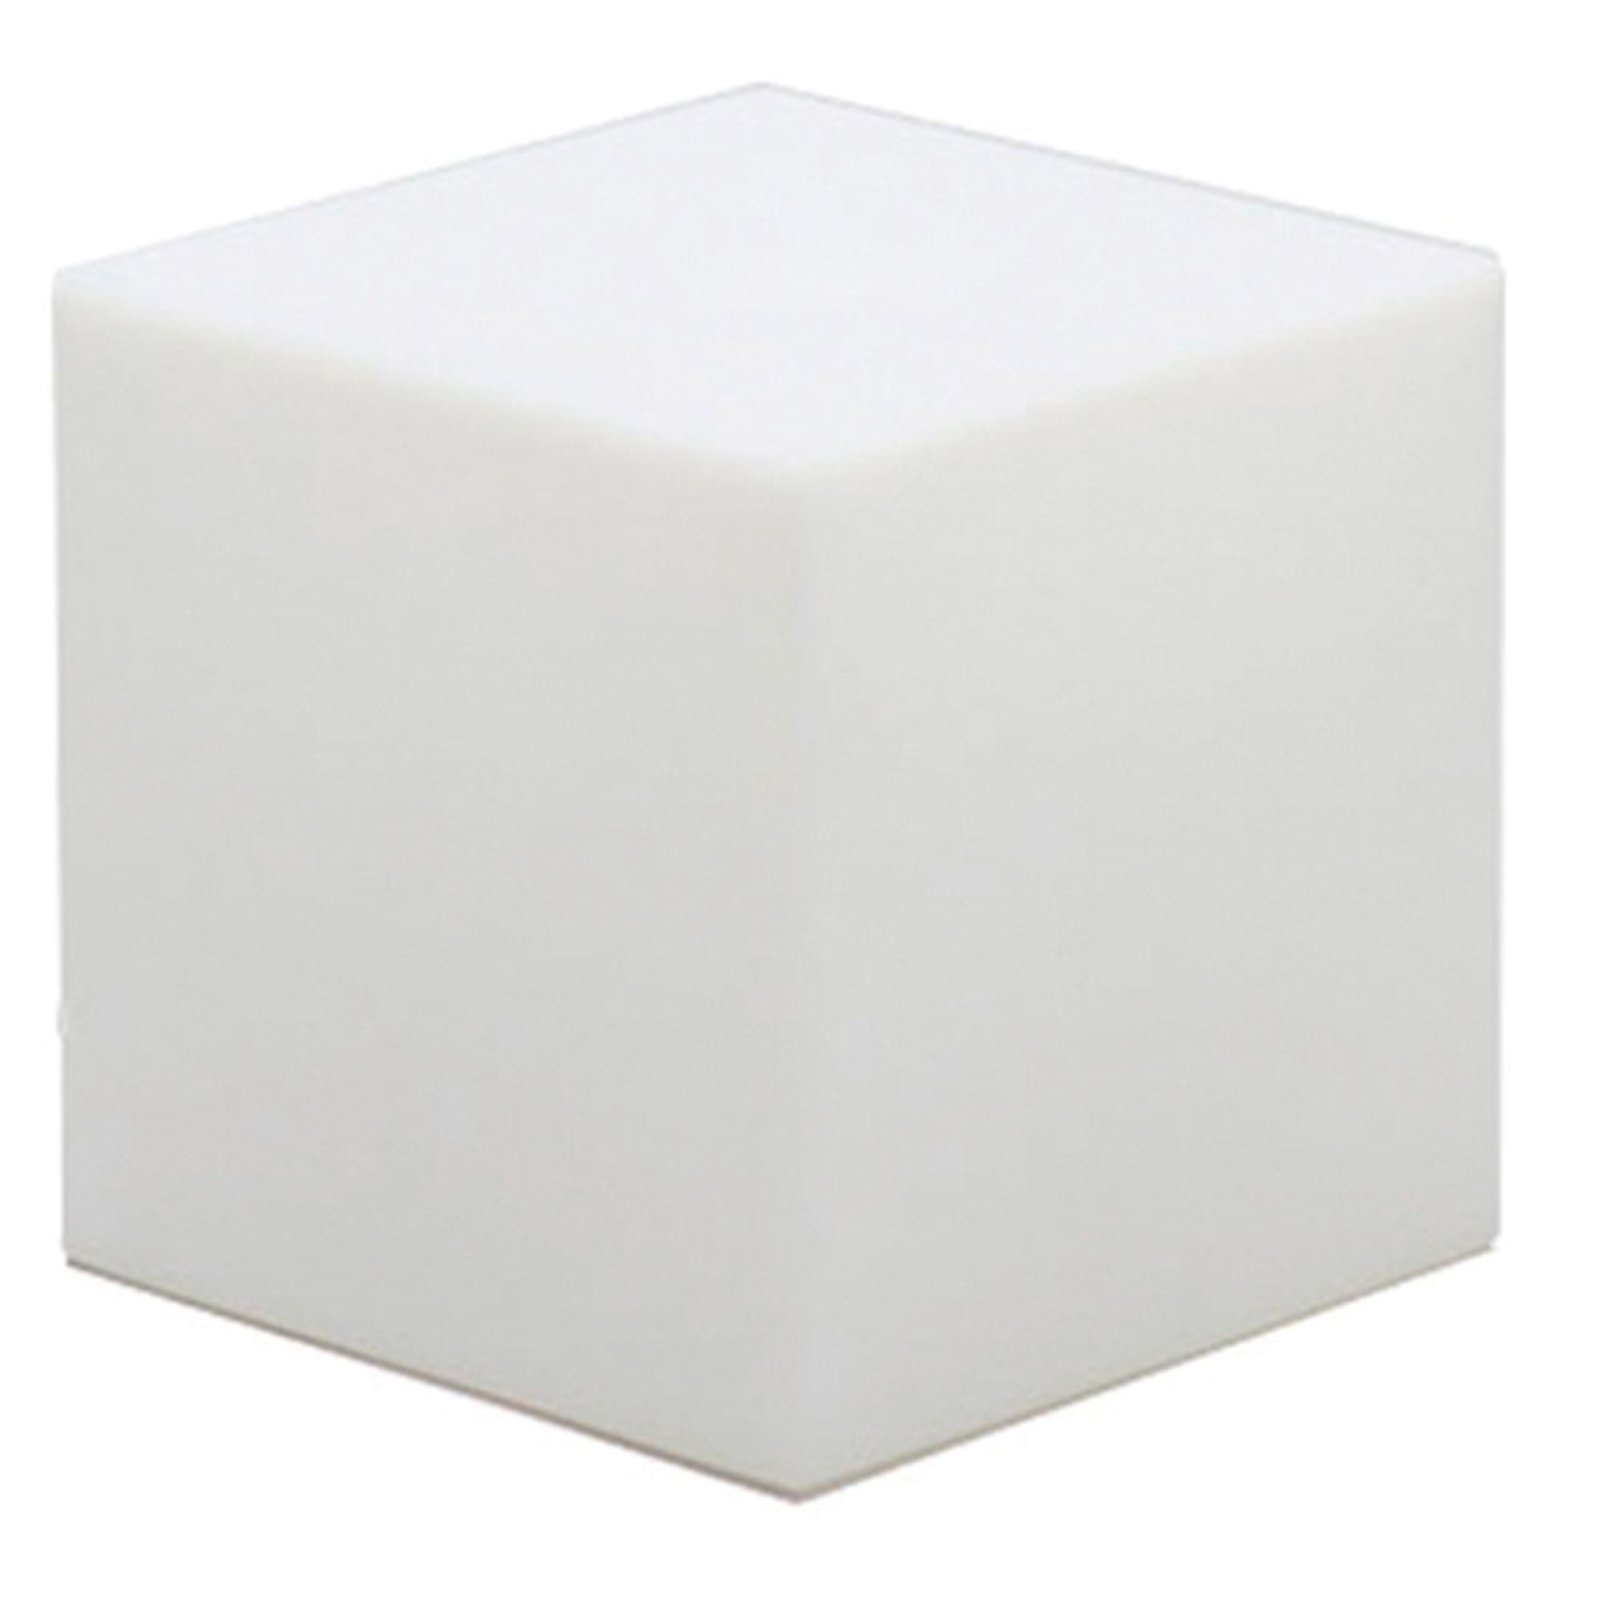 Cuby cubo luminoso decorativo altura 43cm